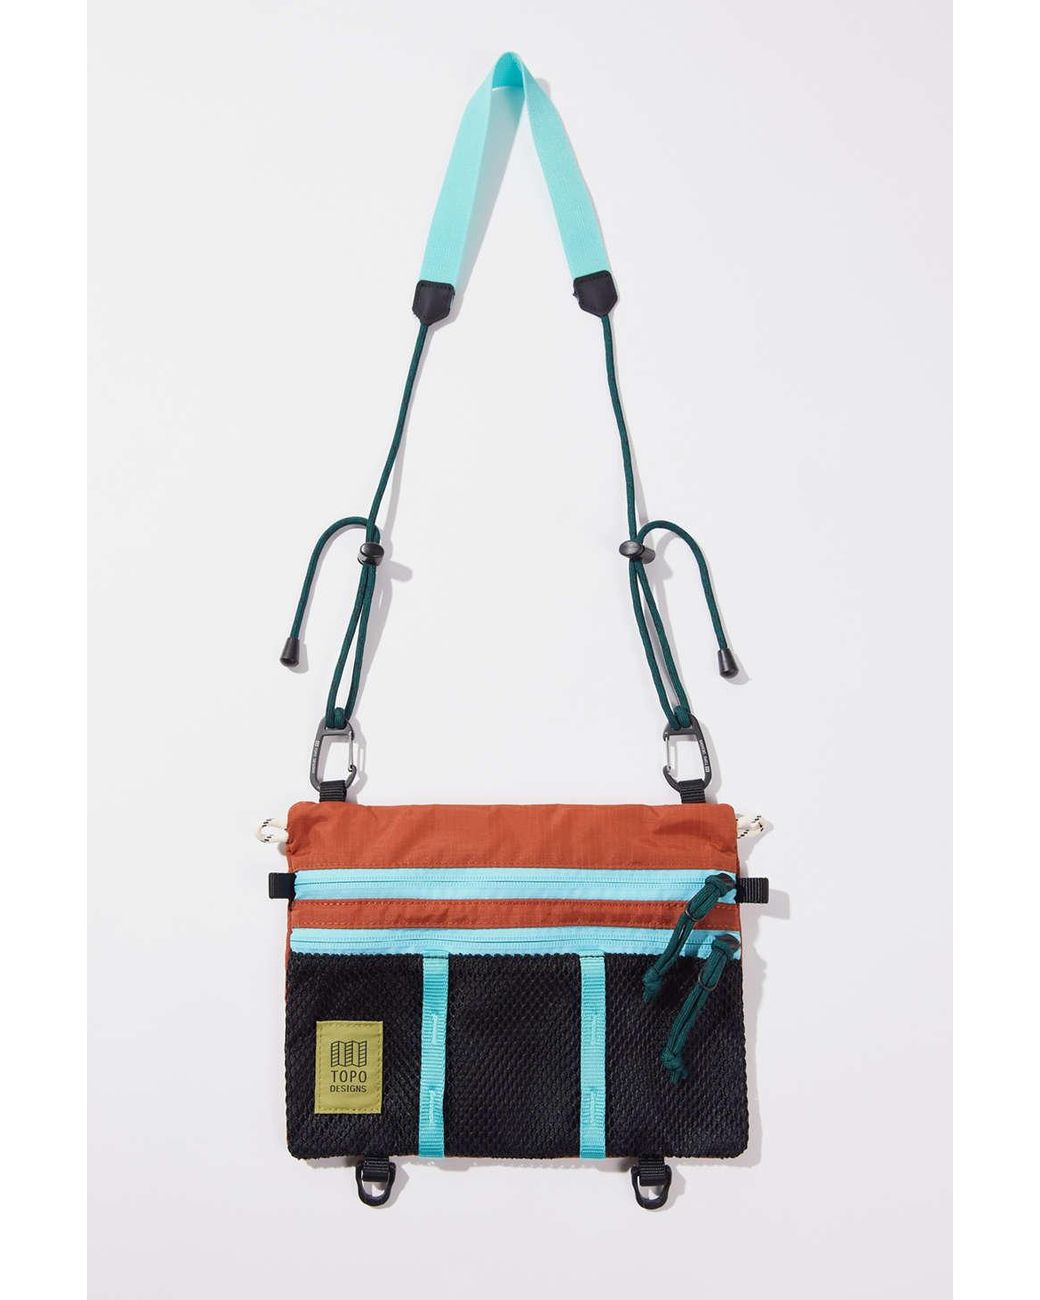 Topo Designs Mountain Accessory Shoulder Bag Khaki/Grape